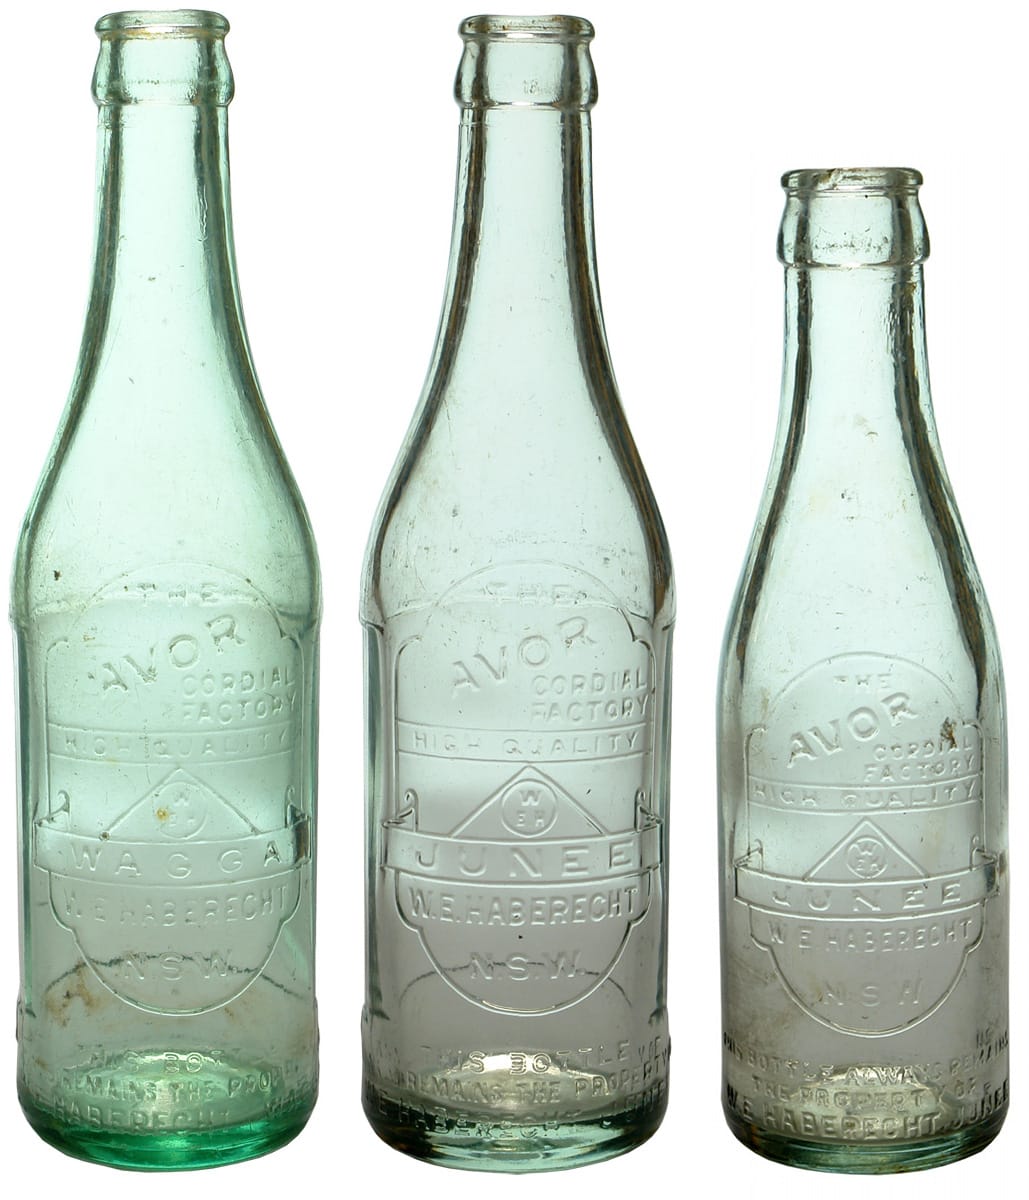 Haberecht Wagga Junee Crown Seal Bottles